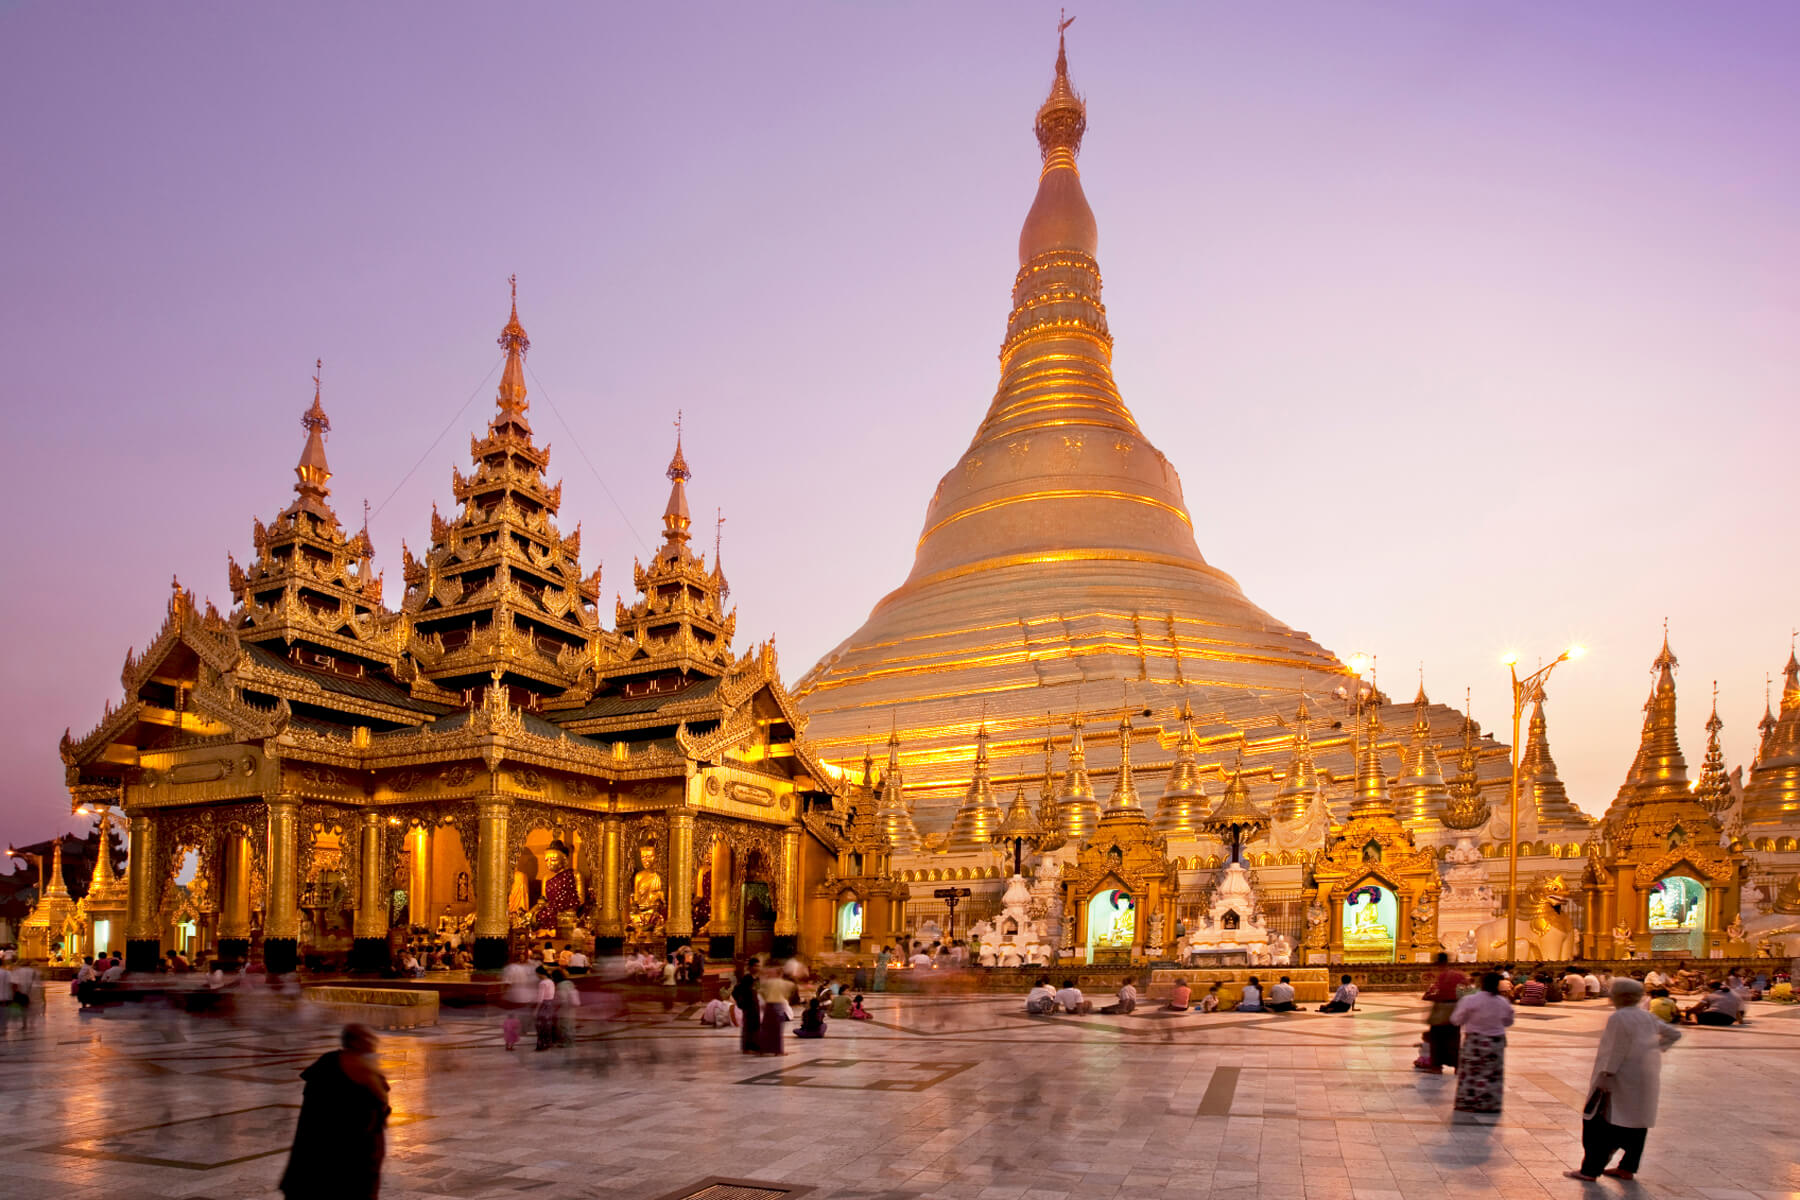 Tour du lịch Myanmar Tâm linh 2022/2023 187744